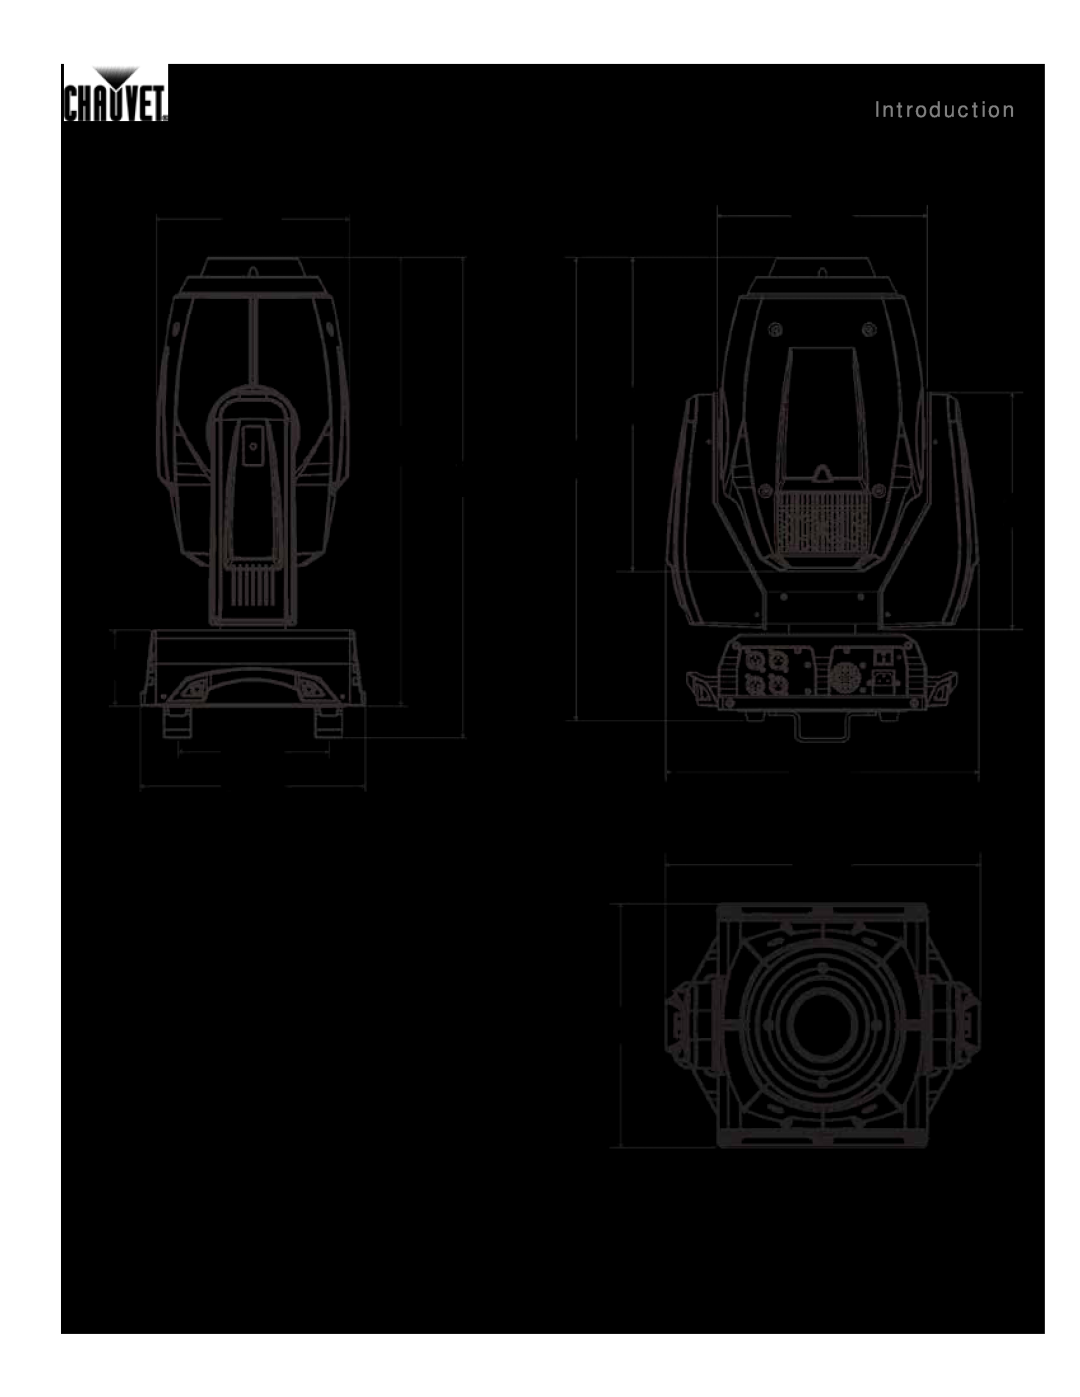 Chauvet user manual Product Dimensions, Introduction, Q-Spot 560-LEDUser Manual Rev 